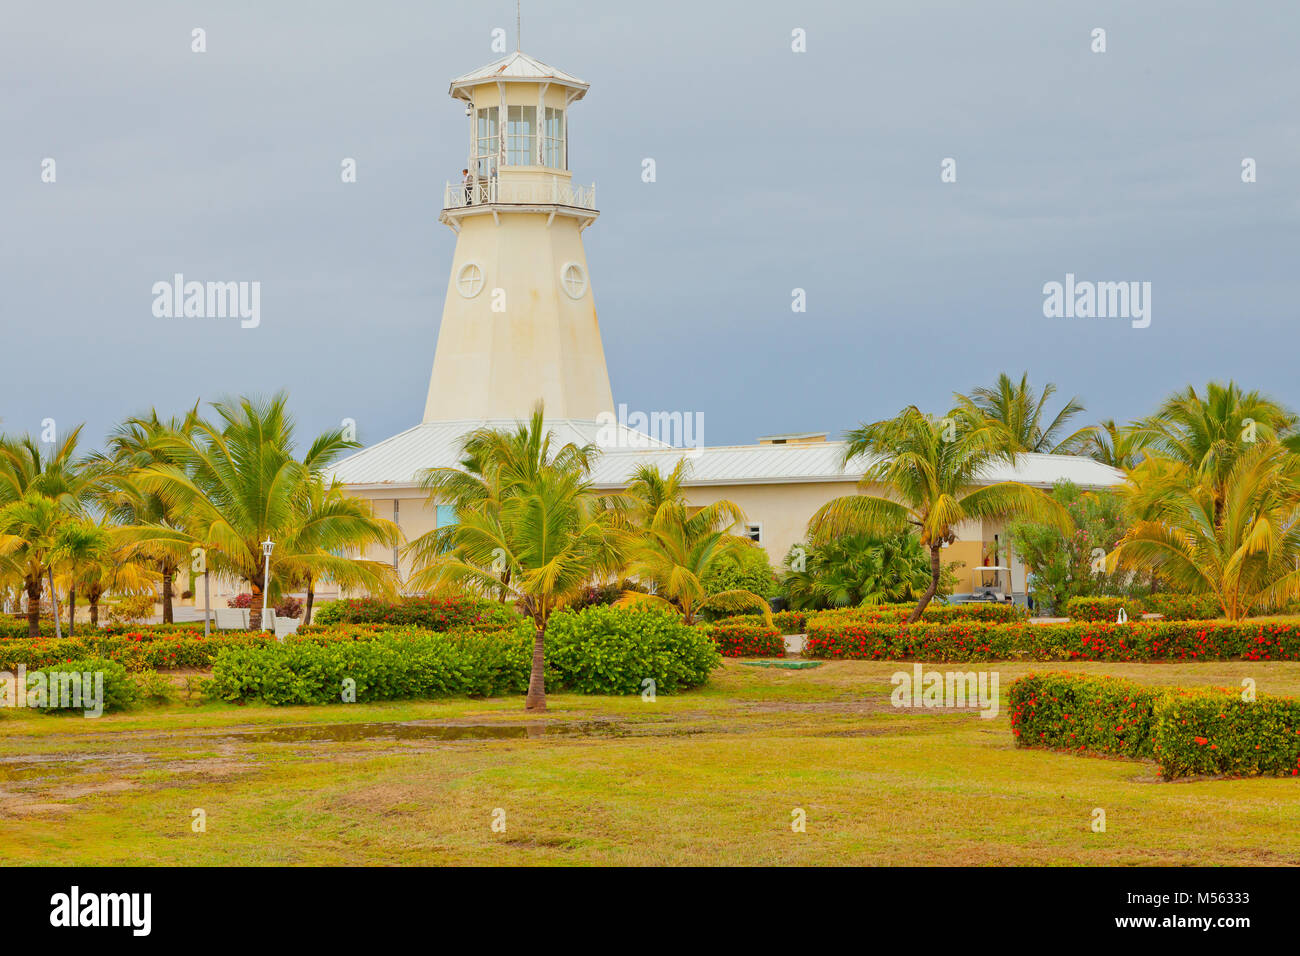 Lighthouse on the beach in Varadero Cuba Stock Photo